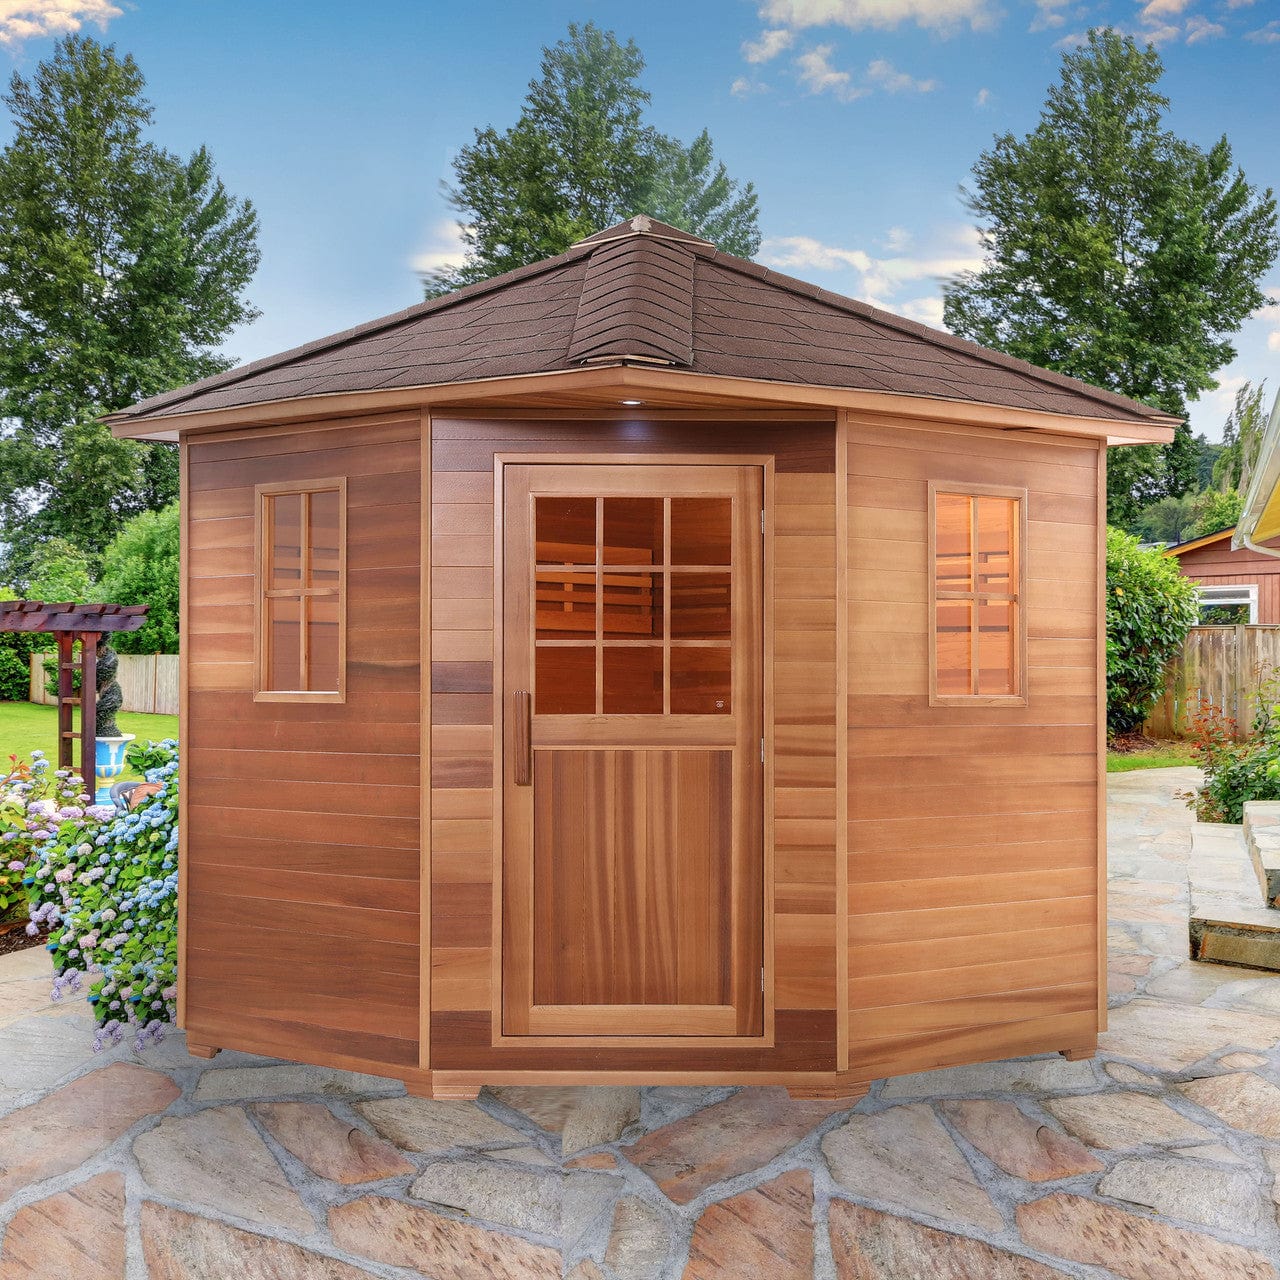 Aleko SKD8RCED-AP Canadian Red Cedar Wet Dry Outdoor Sauna with Asphalt Roof - 8 kW UL Certified Heater - 8 Person